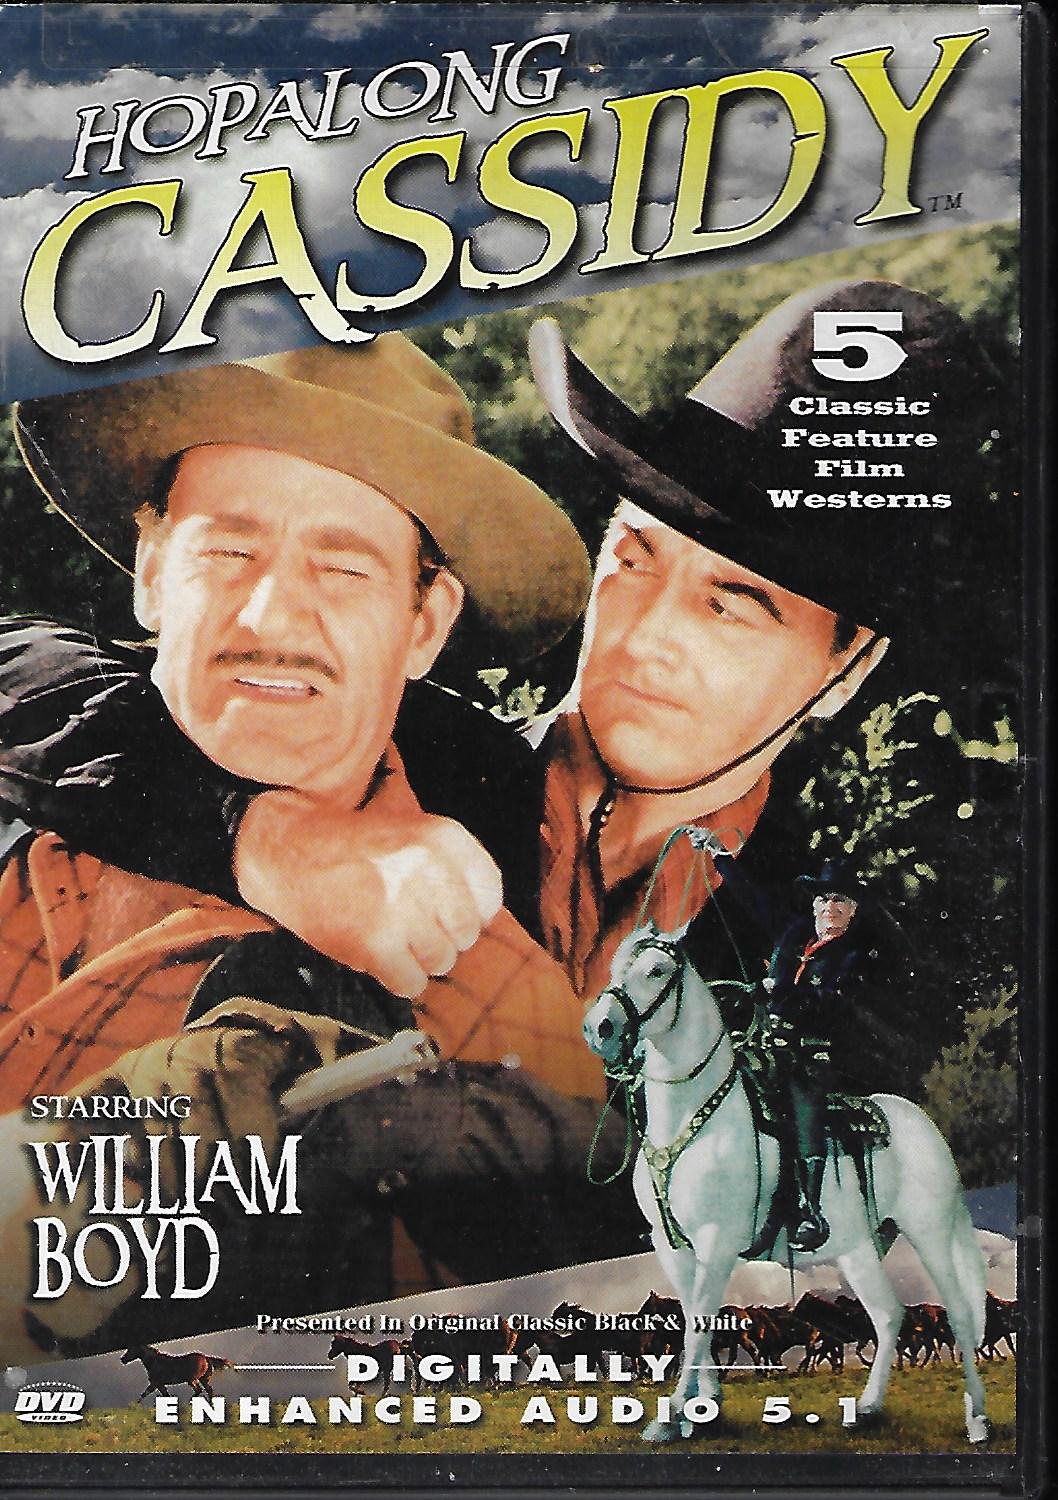 HOPALONG CASSIDY (WILLIAM BOYD) - Hopalong Cassidy; 5 Classic Feature Film Westerns (Border Patrol; Doomed Caravan; Fool's Gold; Forty Thieves; Hidden Gold)